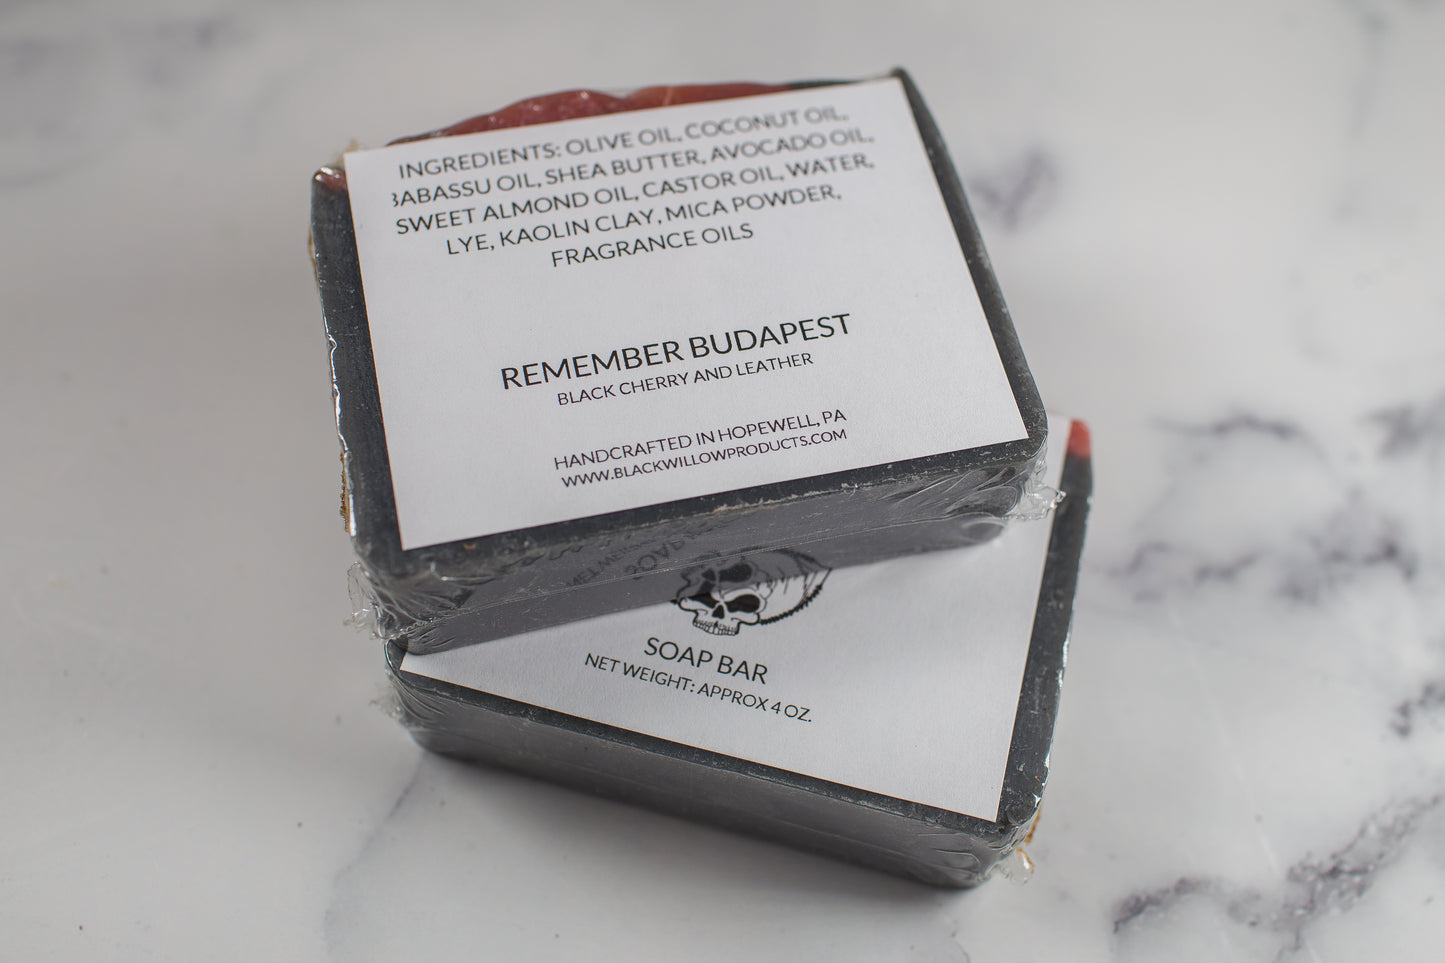 Remember Budapest Soap